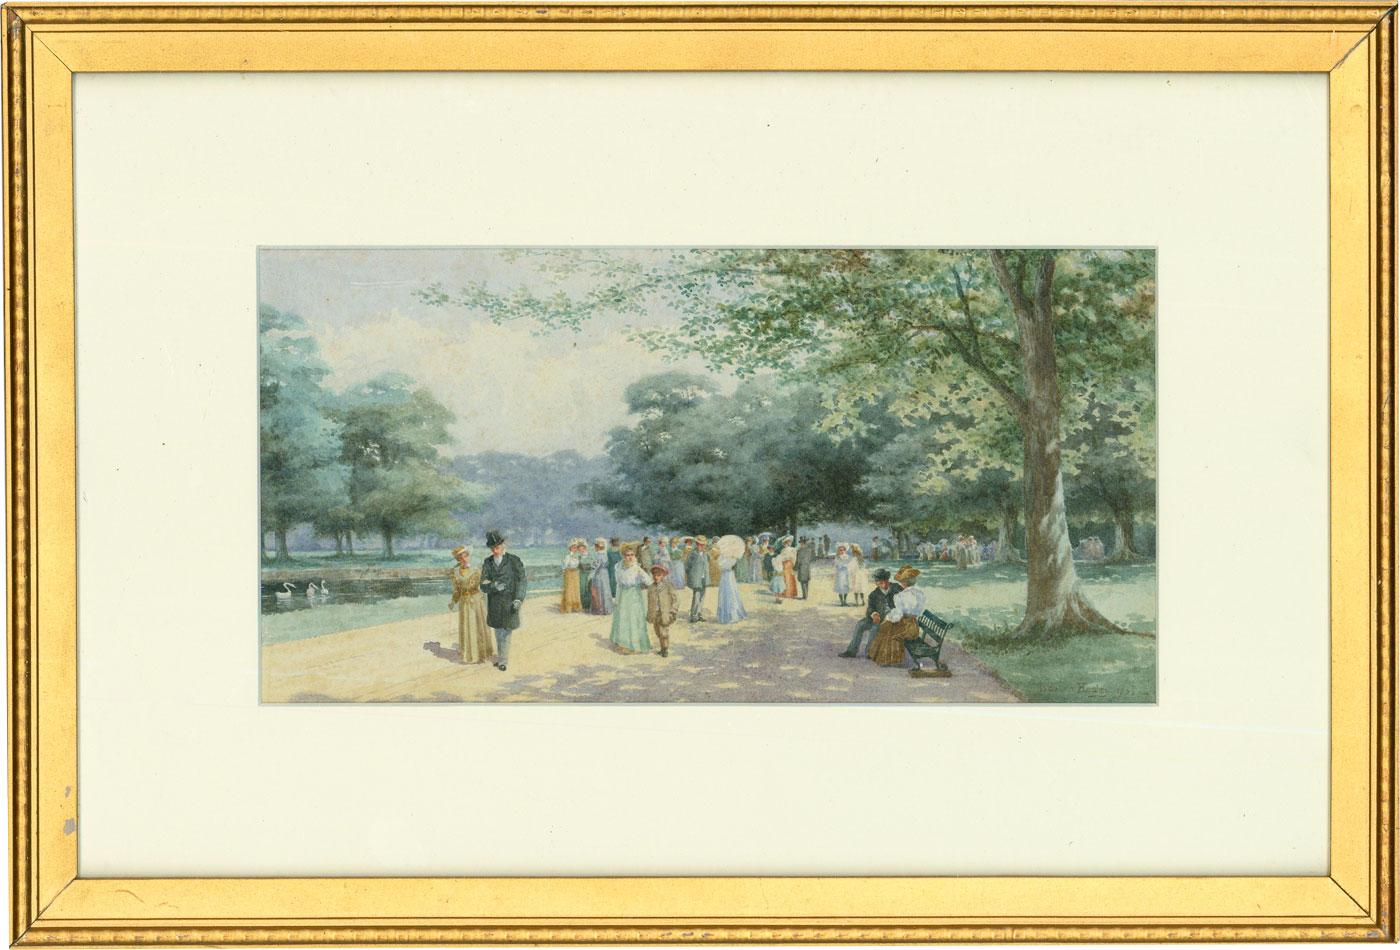 Unknown Landscape Art - Edward Healey (1842-1916) - 1905 Watercolour, Promenading